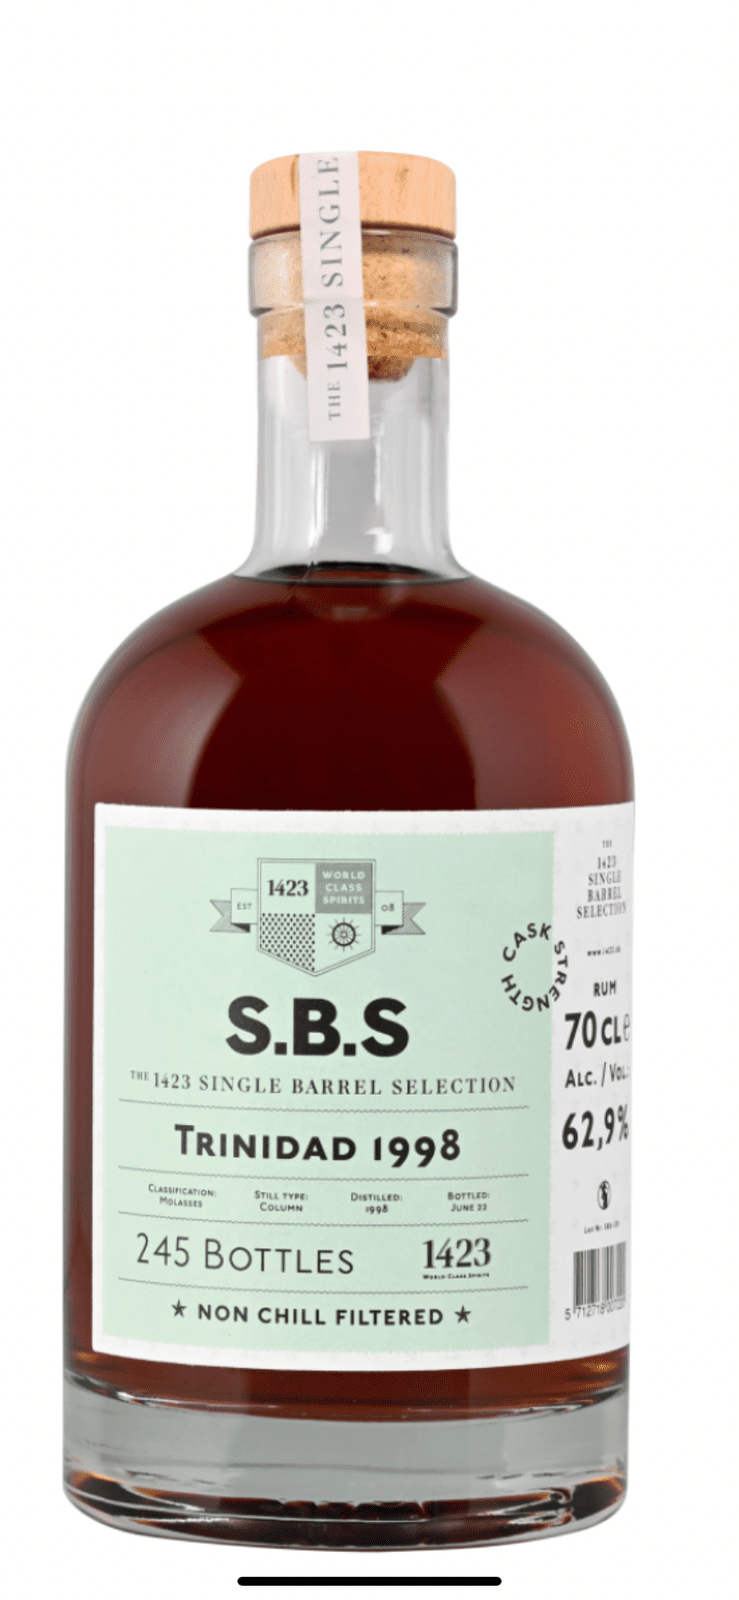 S.B.S Trinidad 1998 62,9% ABV - 70 cl